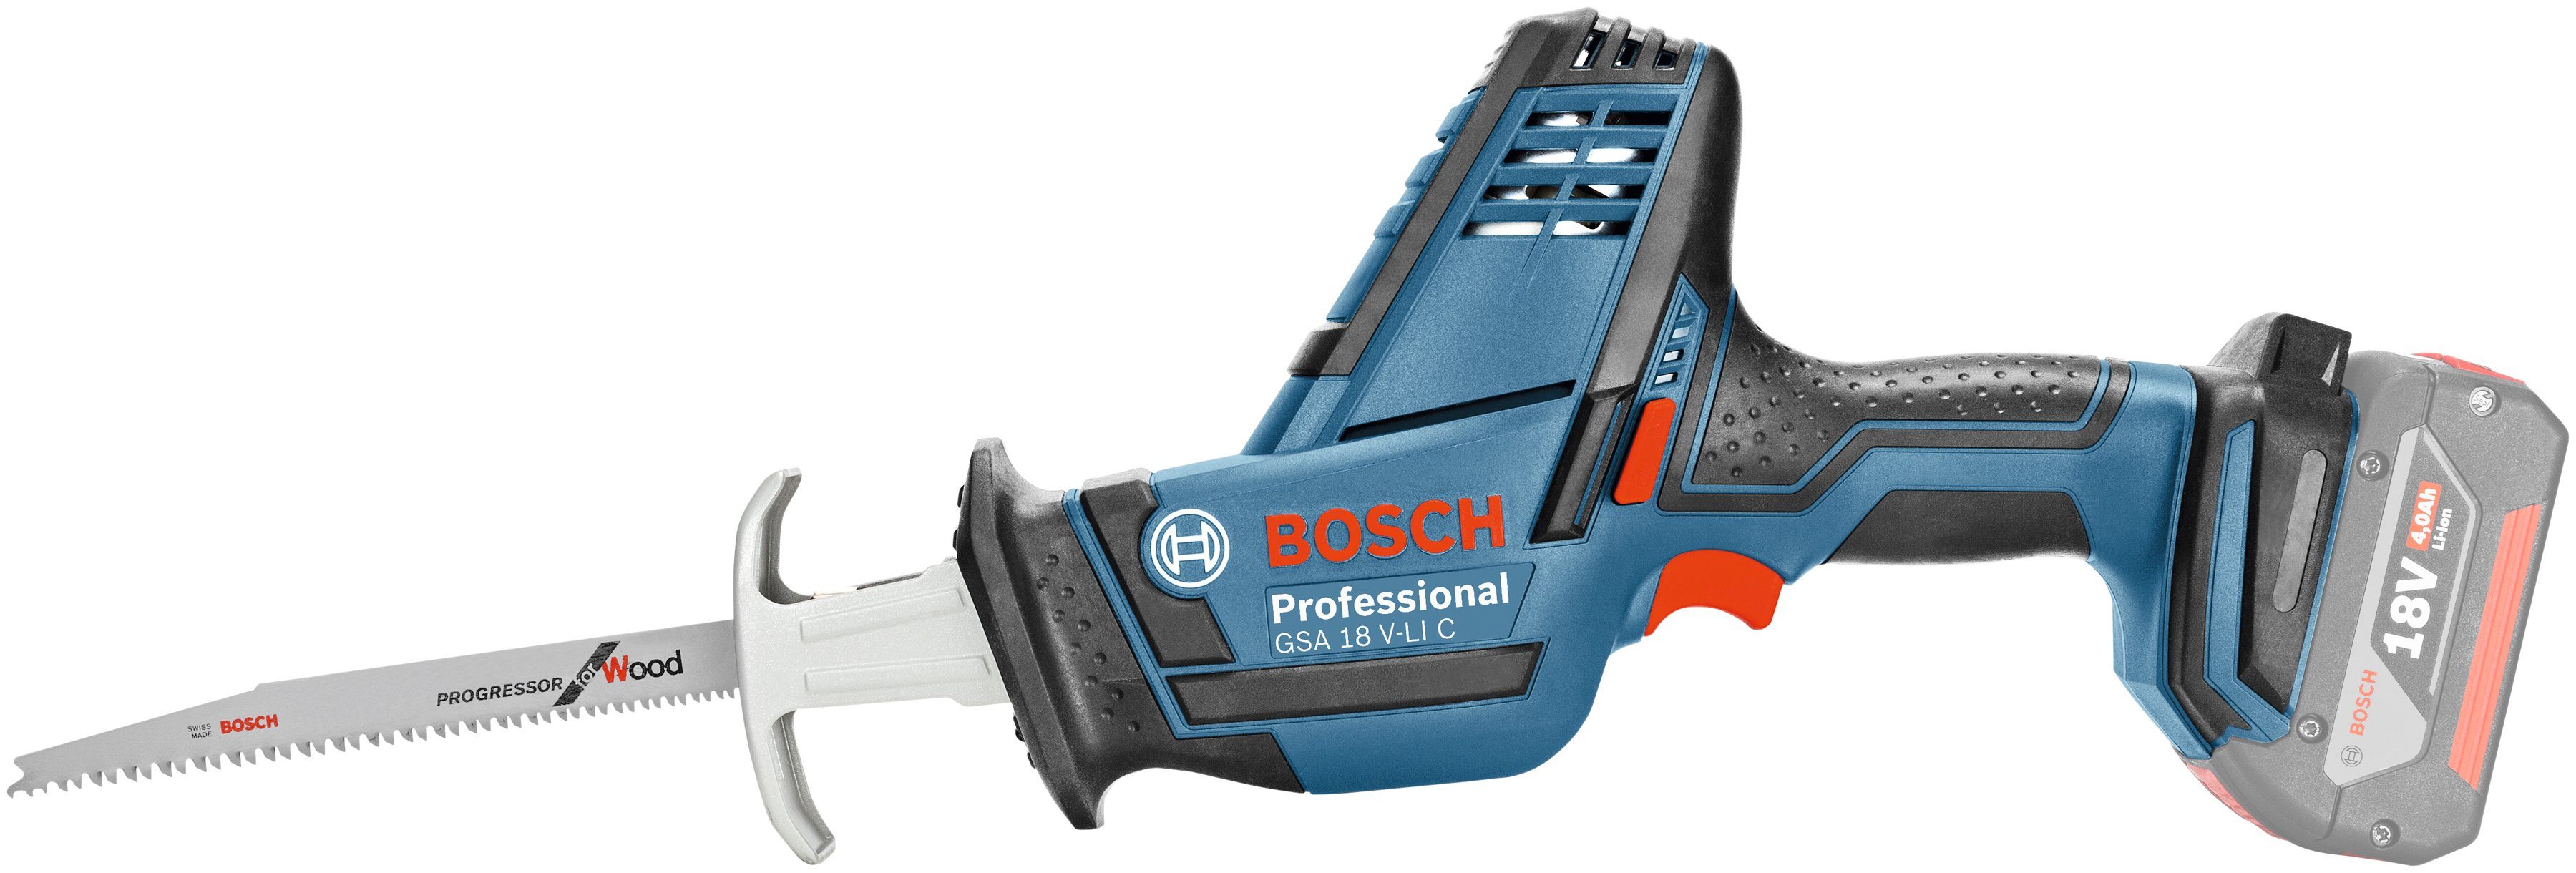 Bosch Professional Akku-Säbelsäge GSA 18 V-LI C, Solo ohne Akku - im Karton